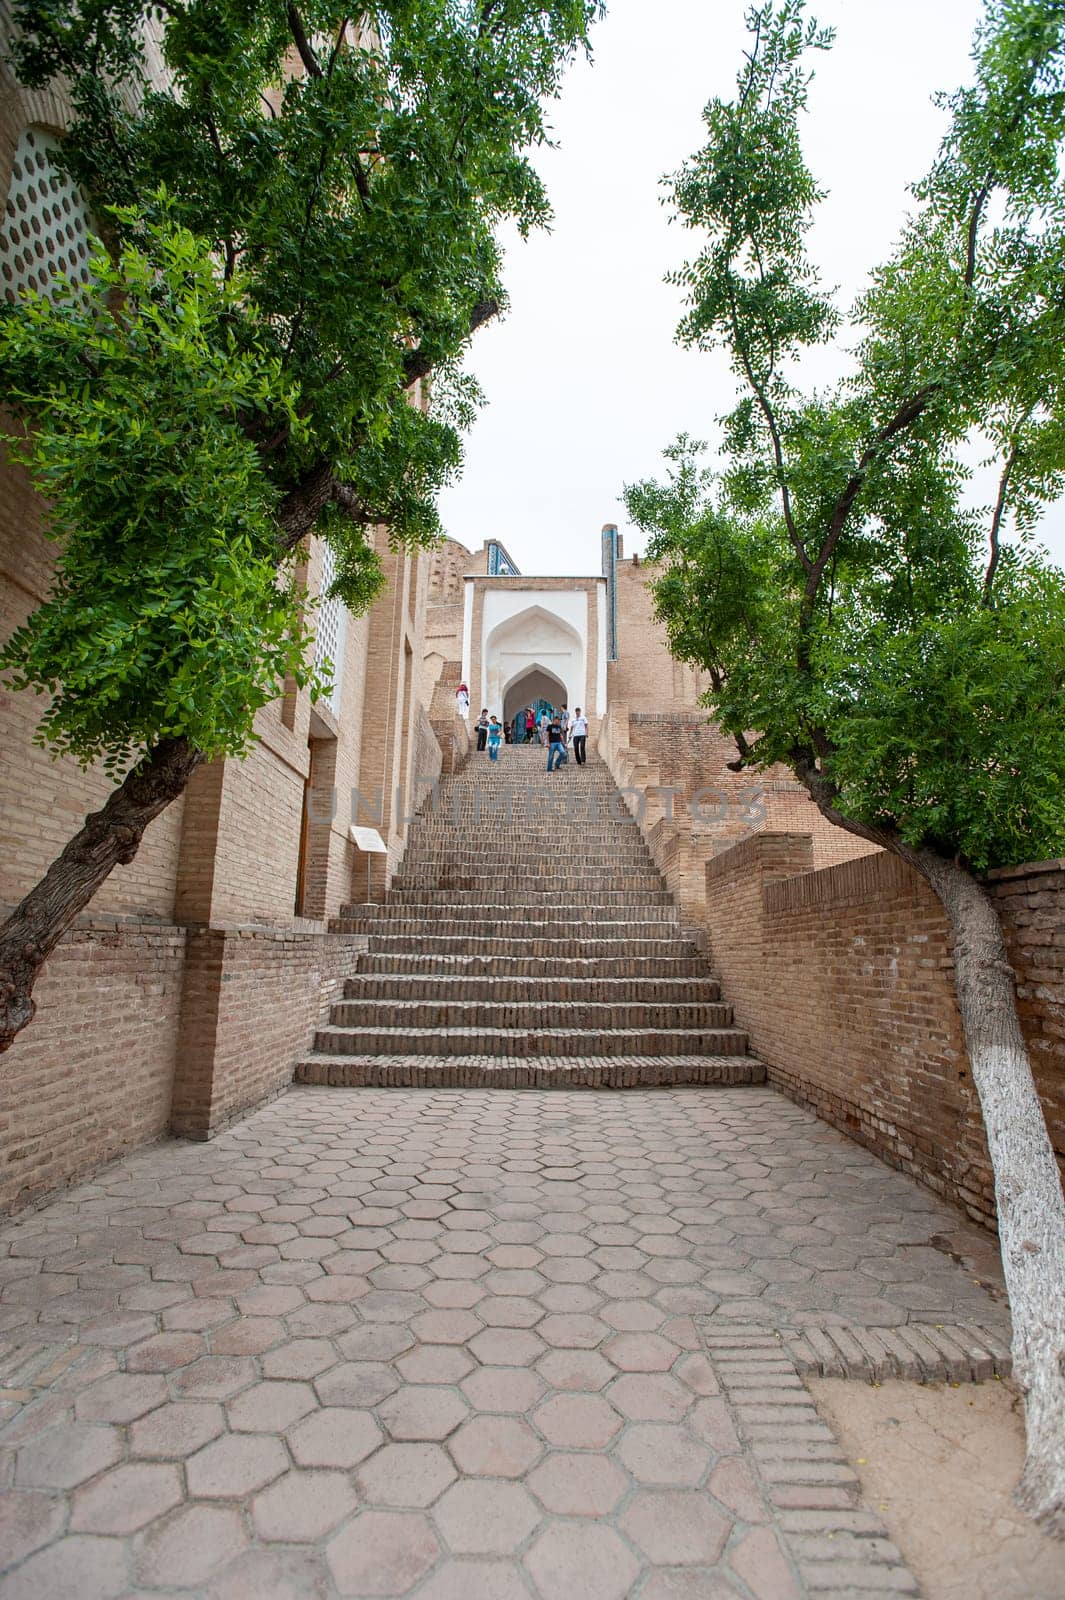 The Shahi Zinda Memorial Complex in Samarkand, Uzbekistanv by A_Karim